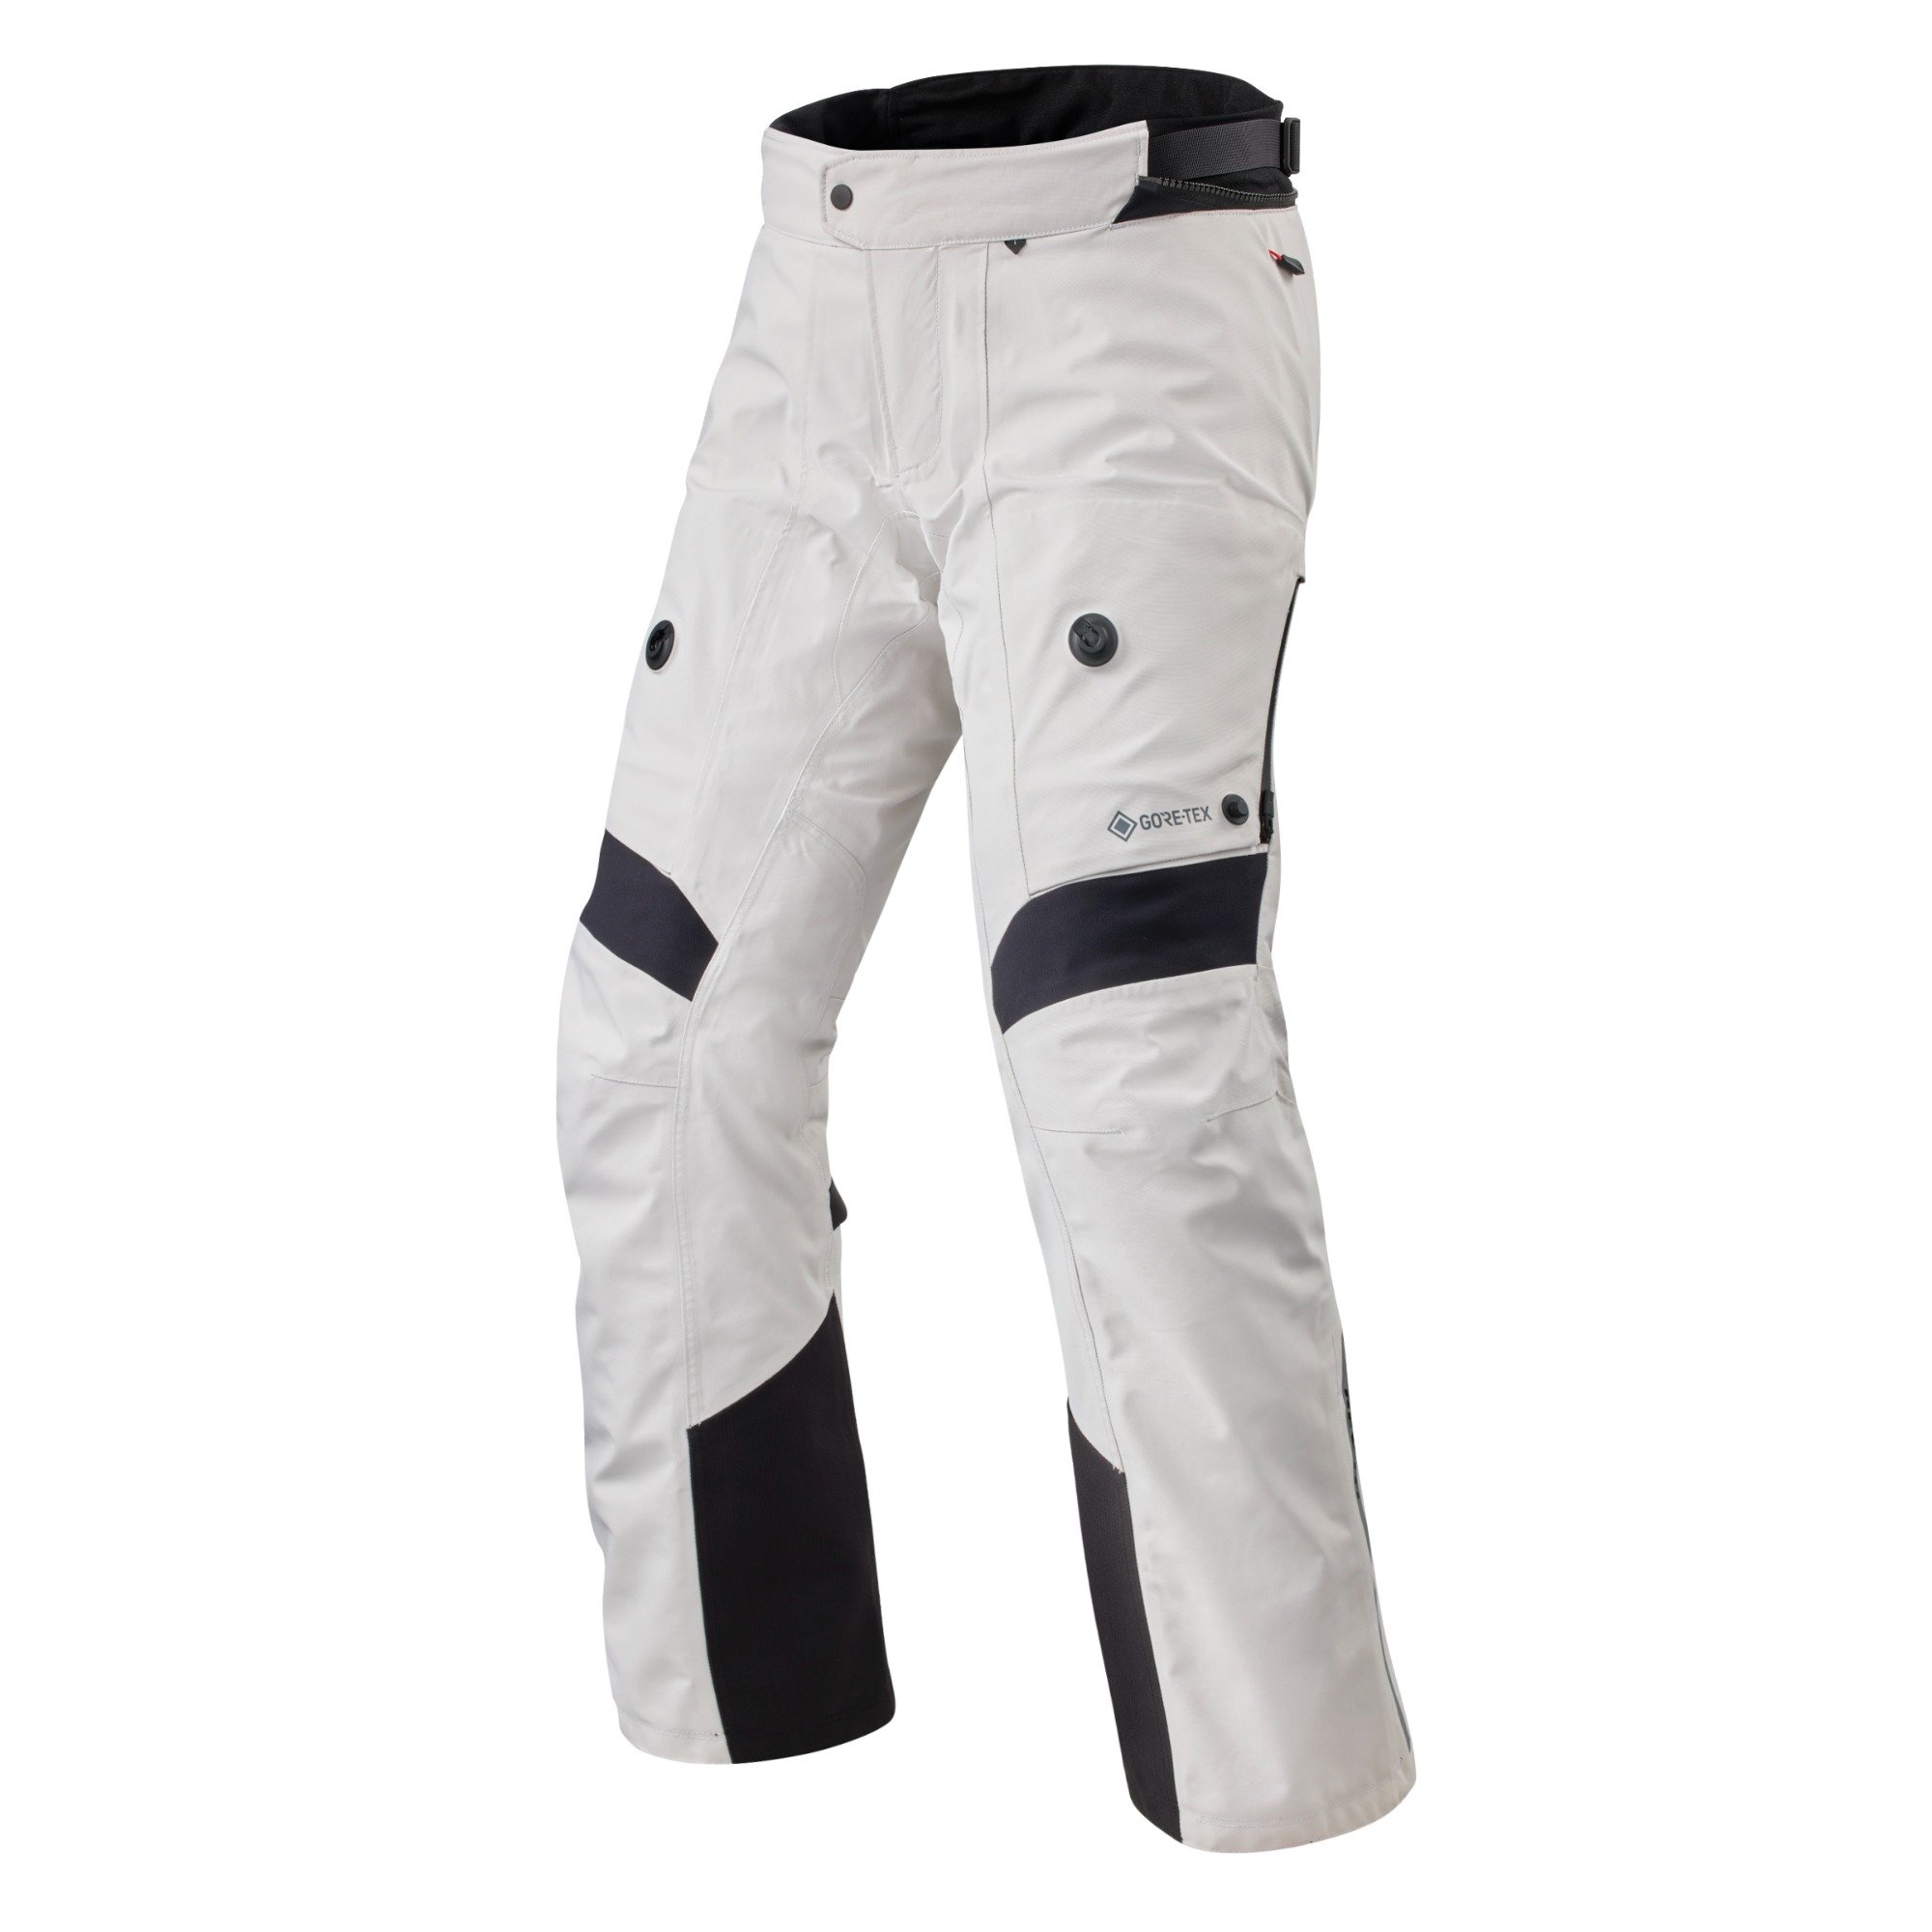 Image of REV'IT! Pants Poseidon 3 GTX Silver Black Long Motorcycle Pants Talla L